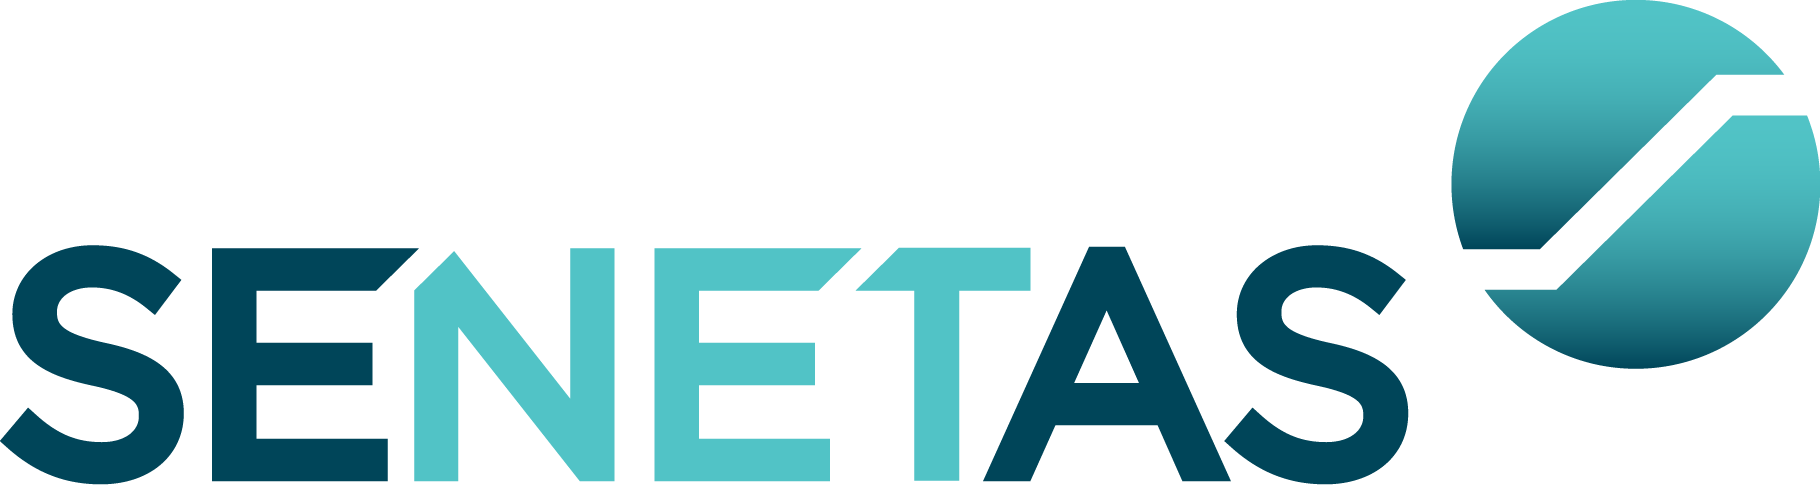 Senetas Corporation Limited Logo